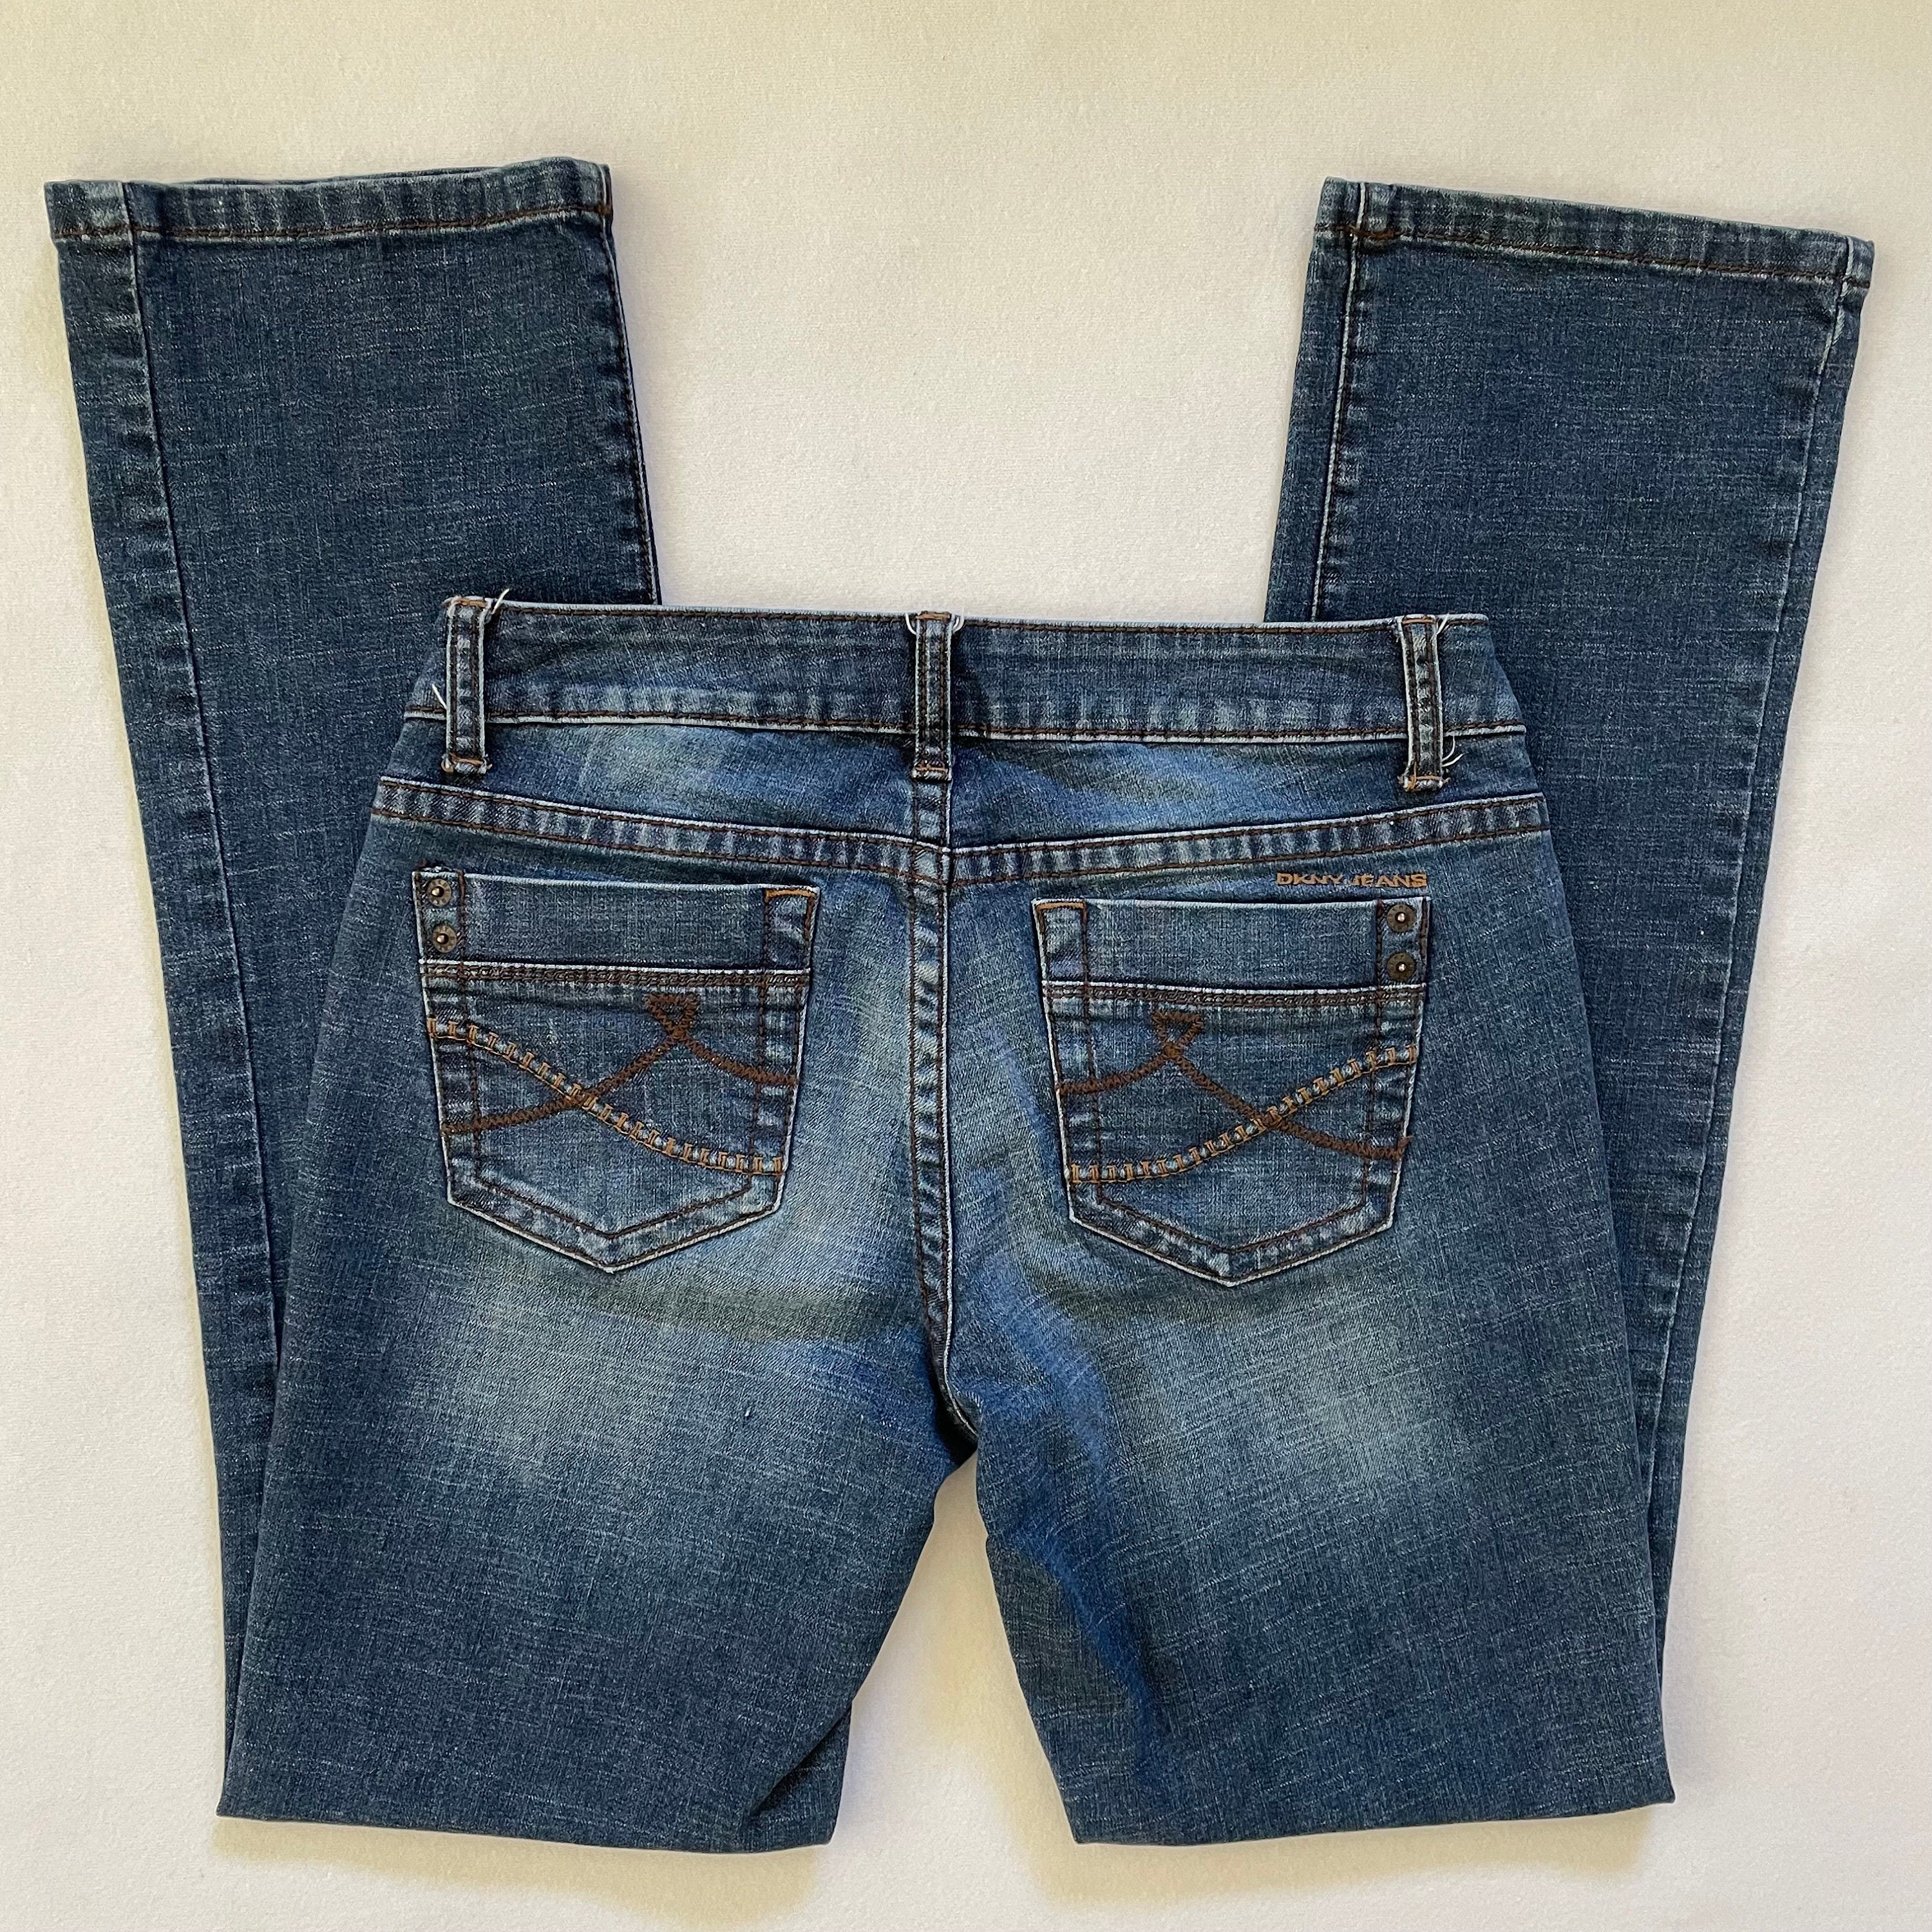 DKNY Jeans Women's Size 10 Light Wash. Color Blue RN68596